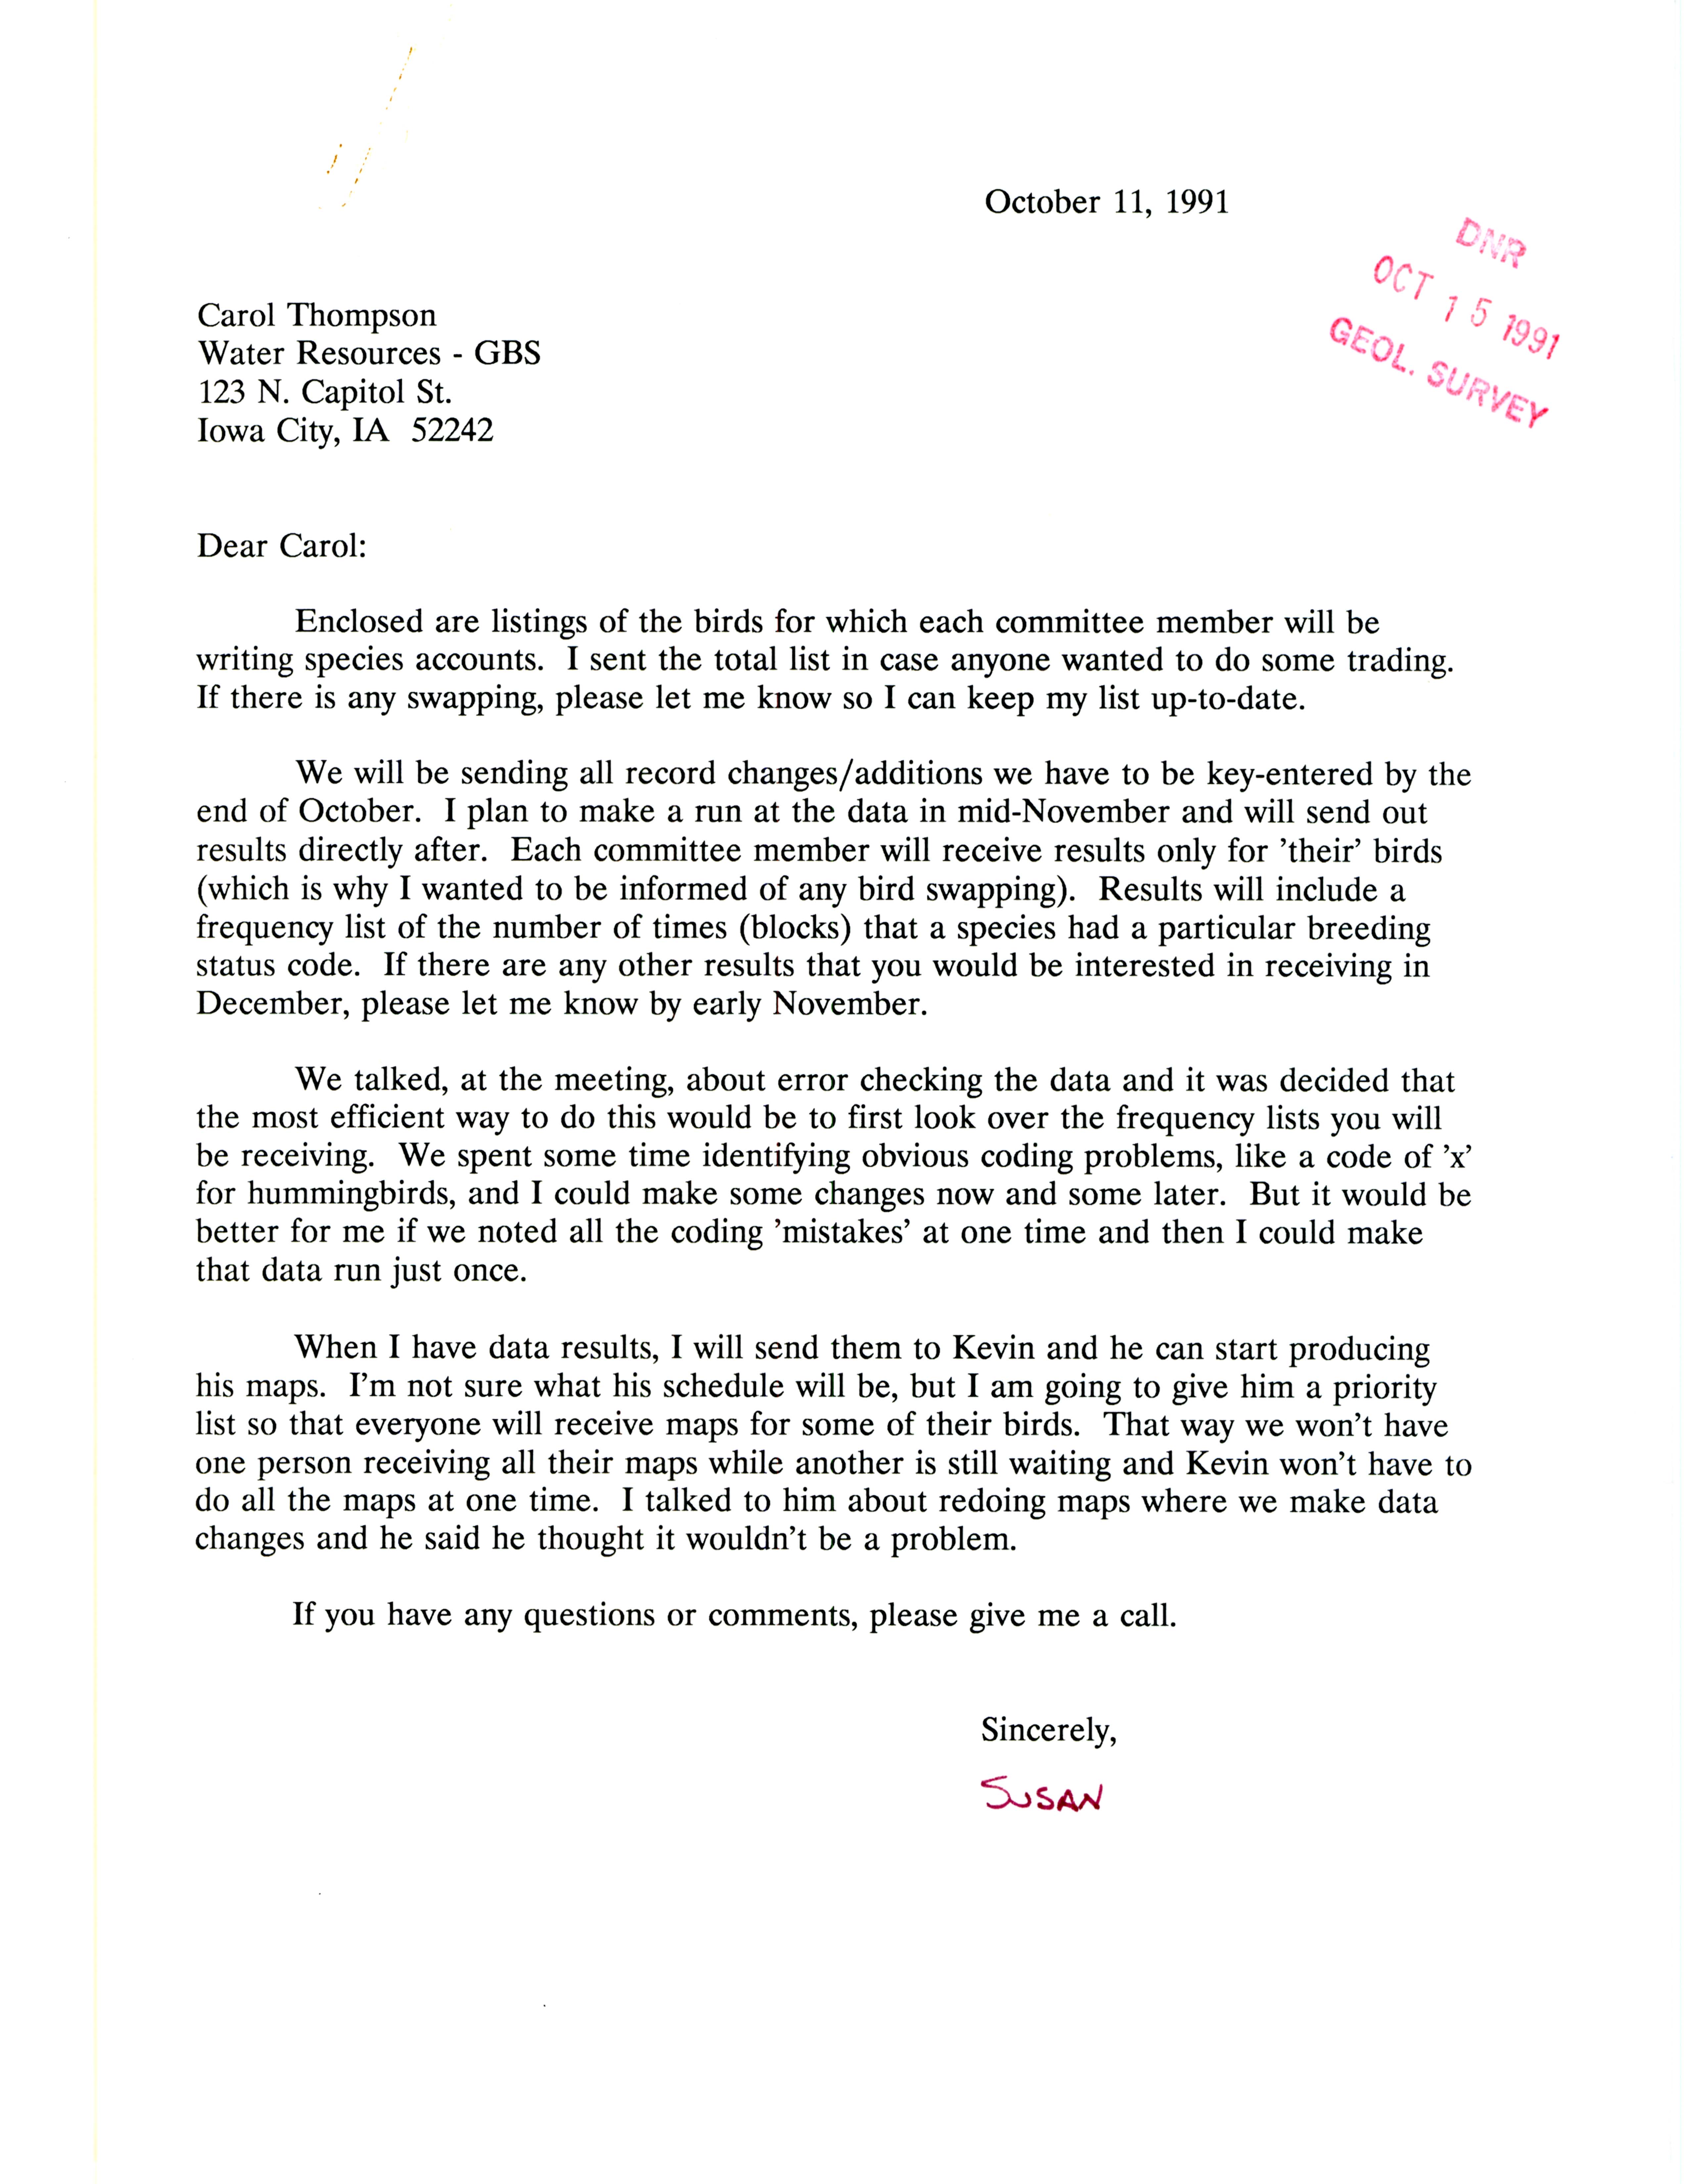 Letter to Carol A. Thompson regarding work on Breeding Bird Atlas, October 11, 1991